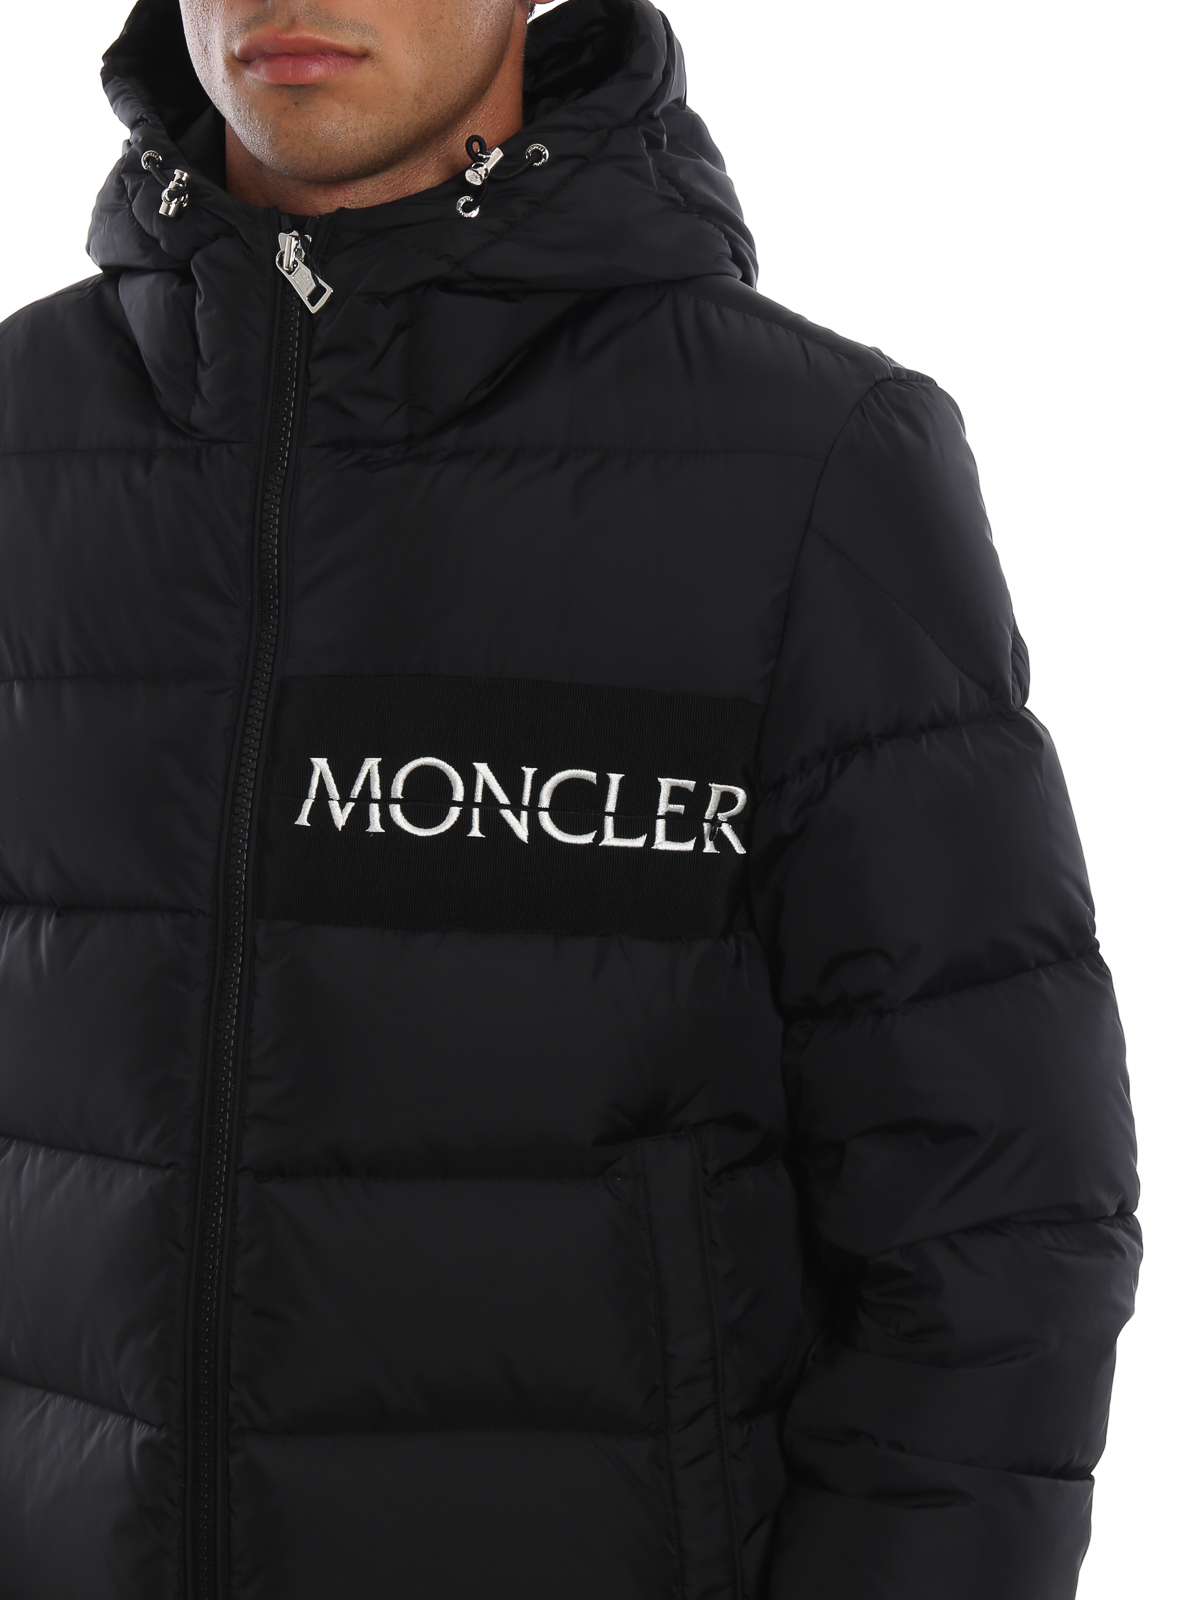 Moncler - Aiton embroidered logo black 